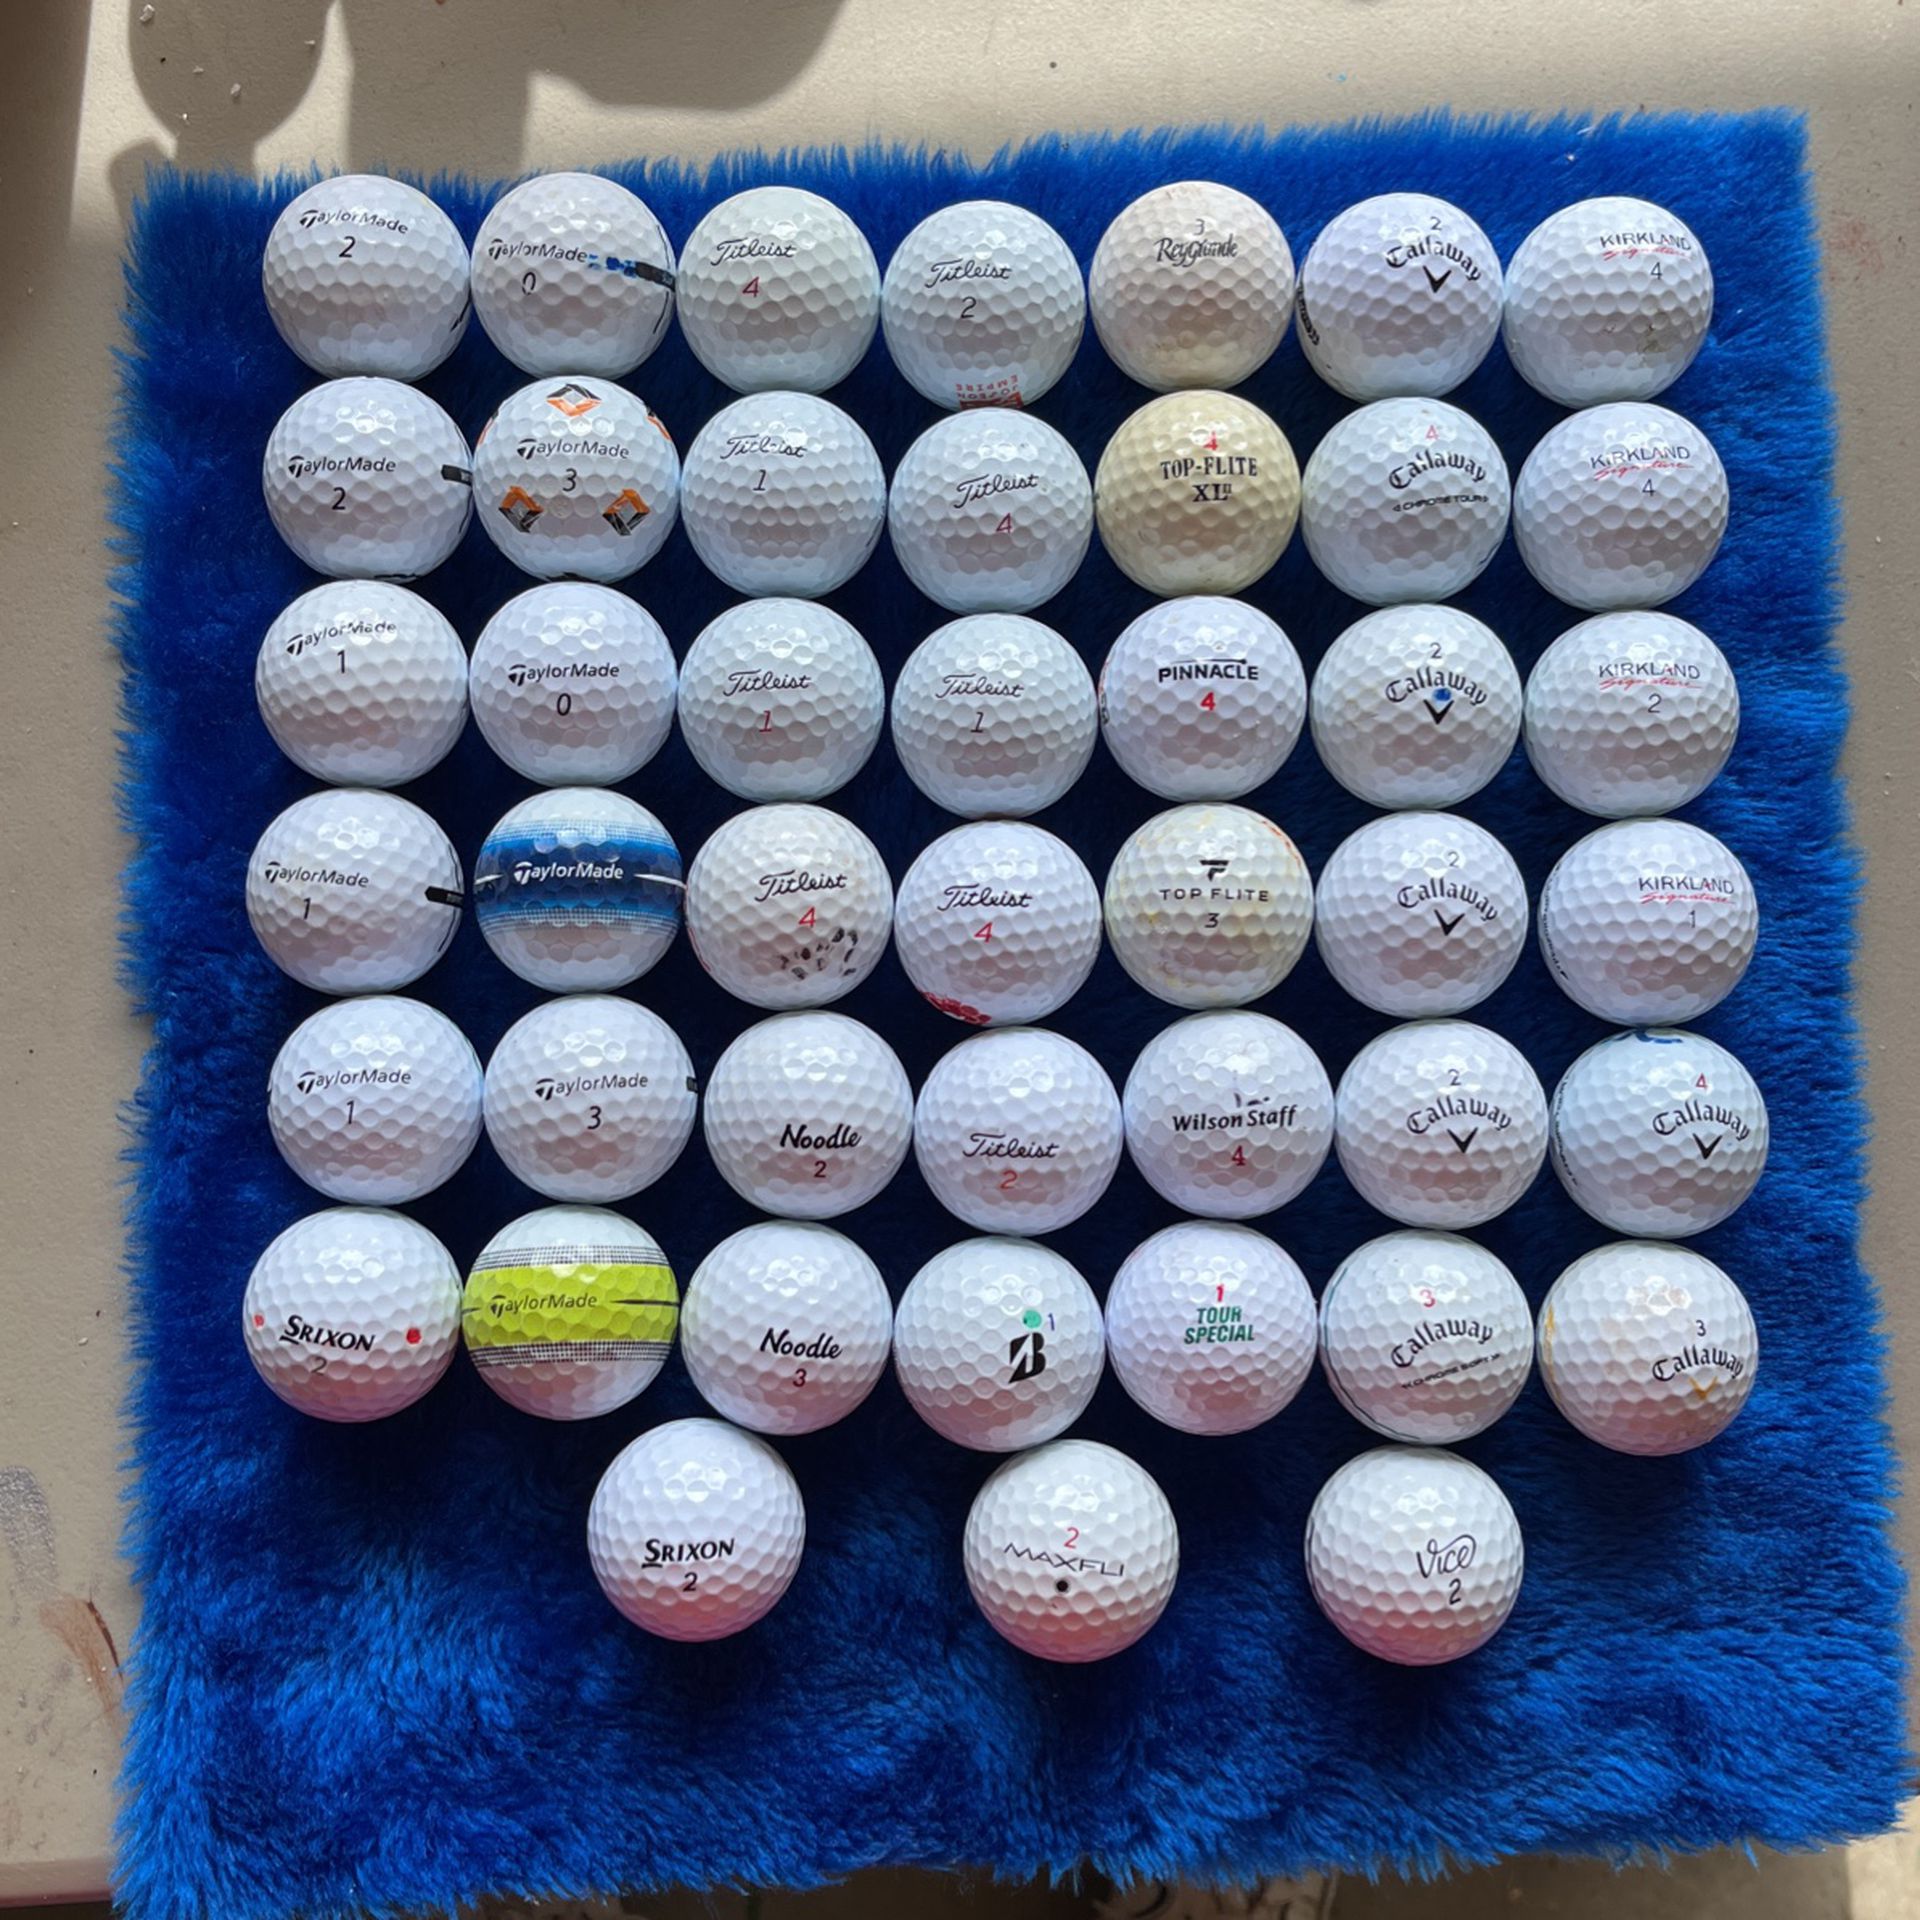 45 Used Assorted Golf Balls